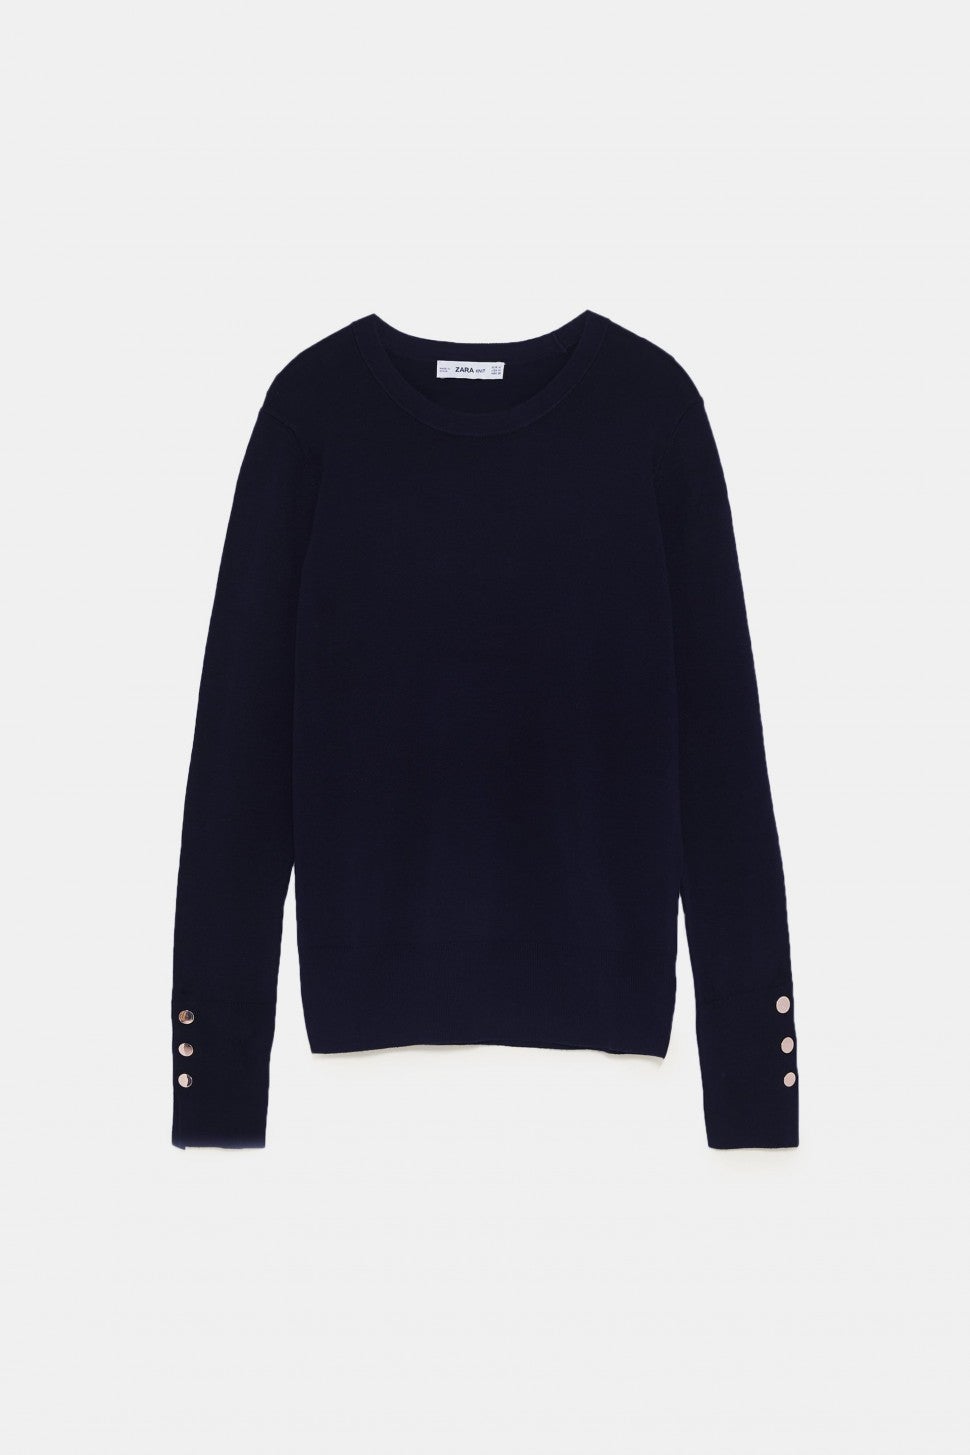 Zara navy sweater